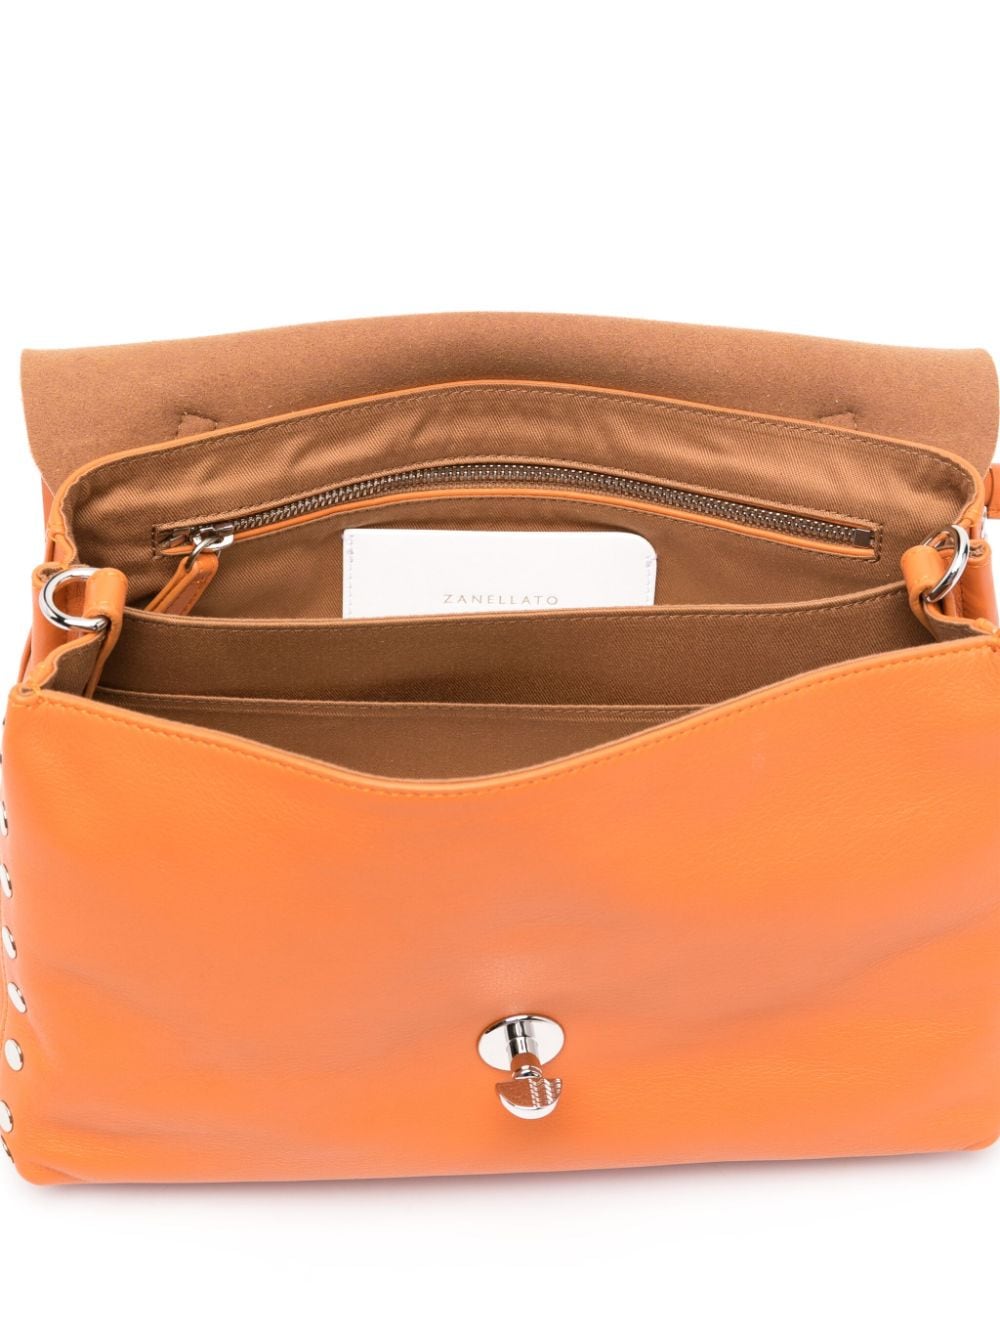 ZANELLATO Carrot Orange Leather Grained Handbag for Women